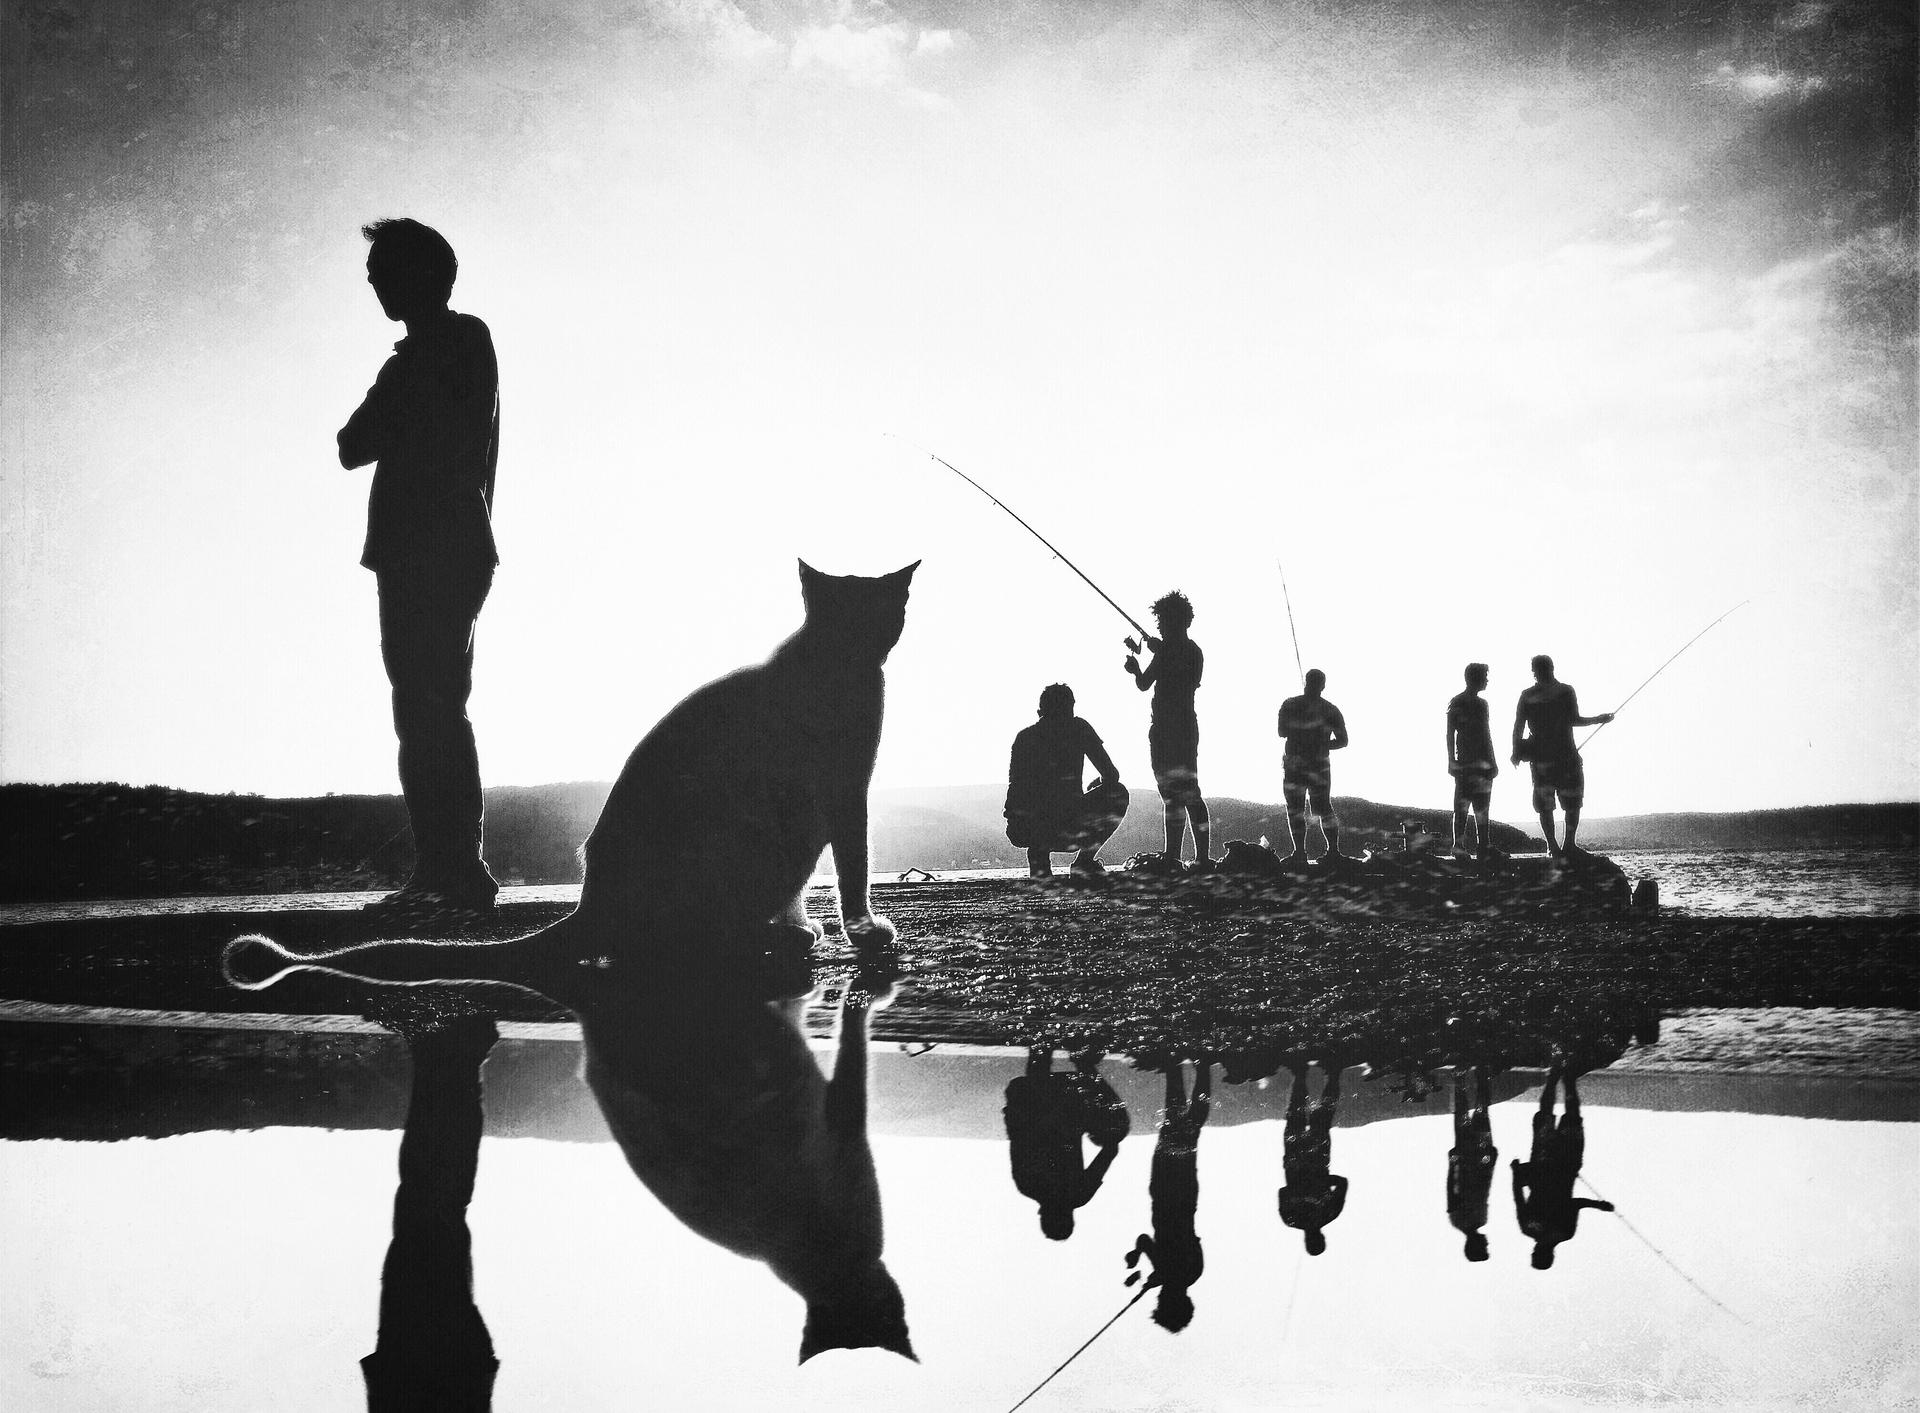 Fishermen’s friend by Yalım Vural